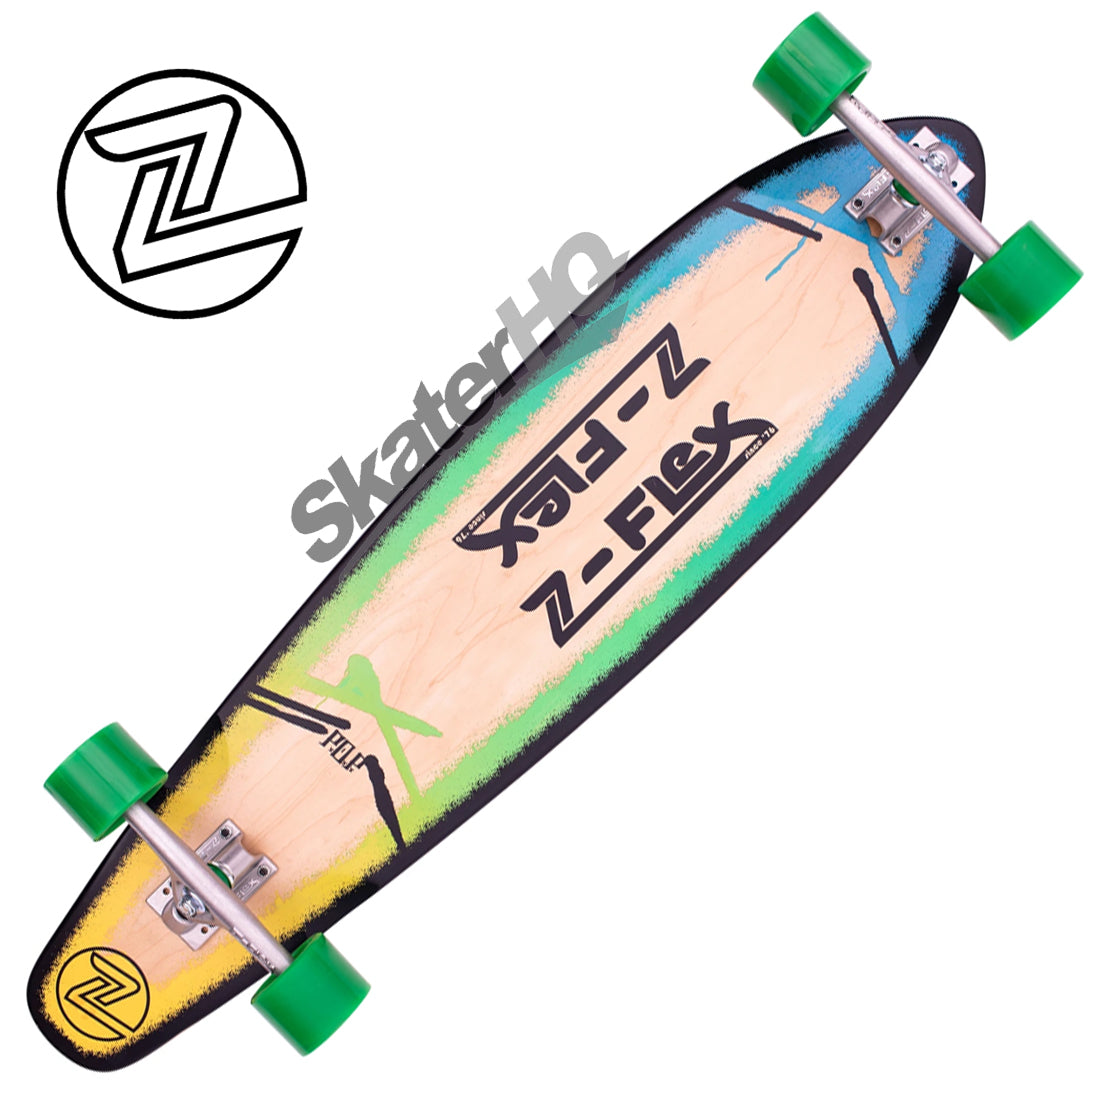 Z-Flex POP 39.5 Roundtail Complete - Blue Fade Skateboard Completes Longboards